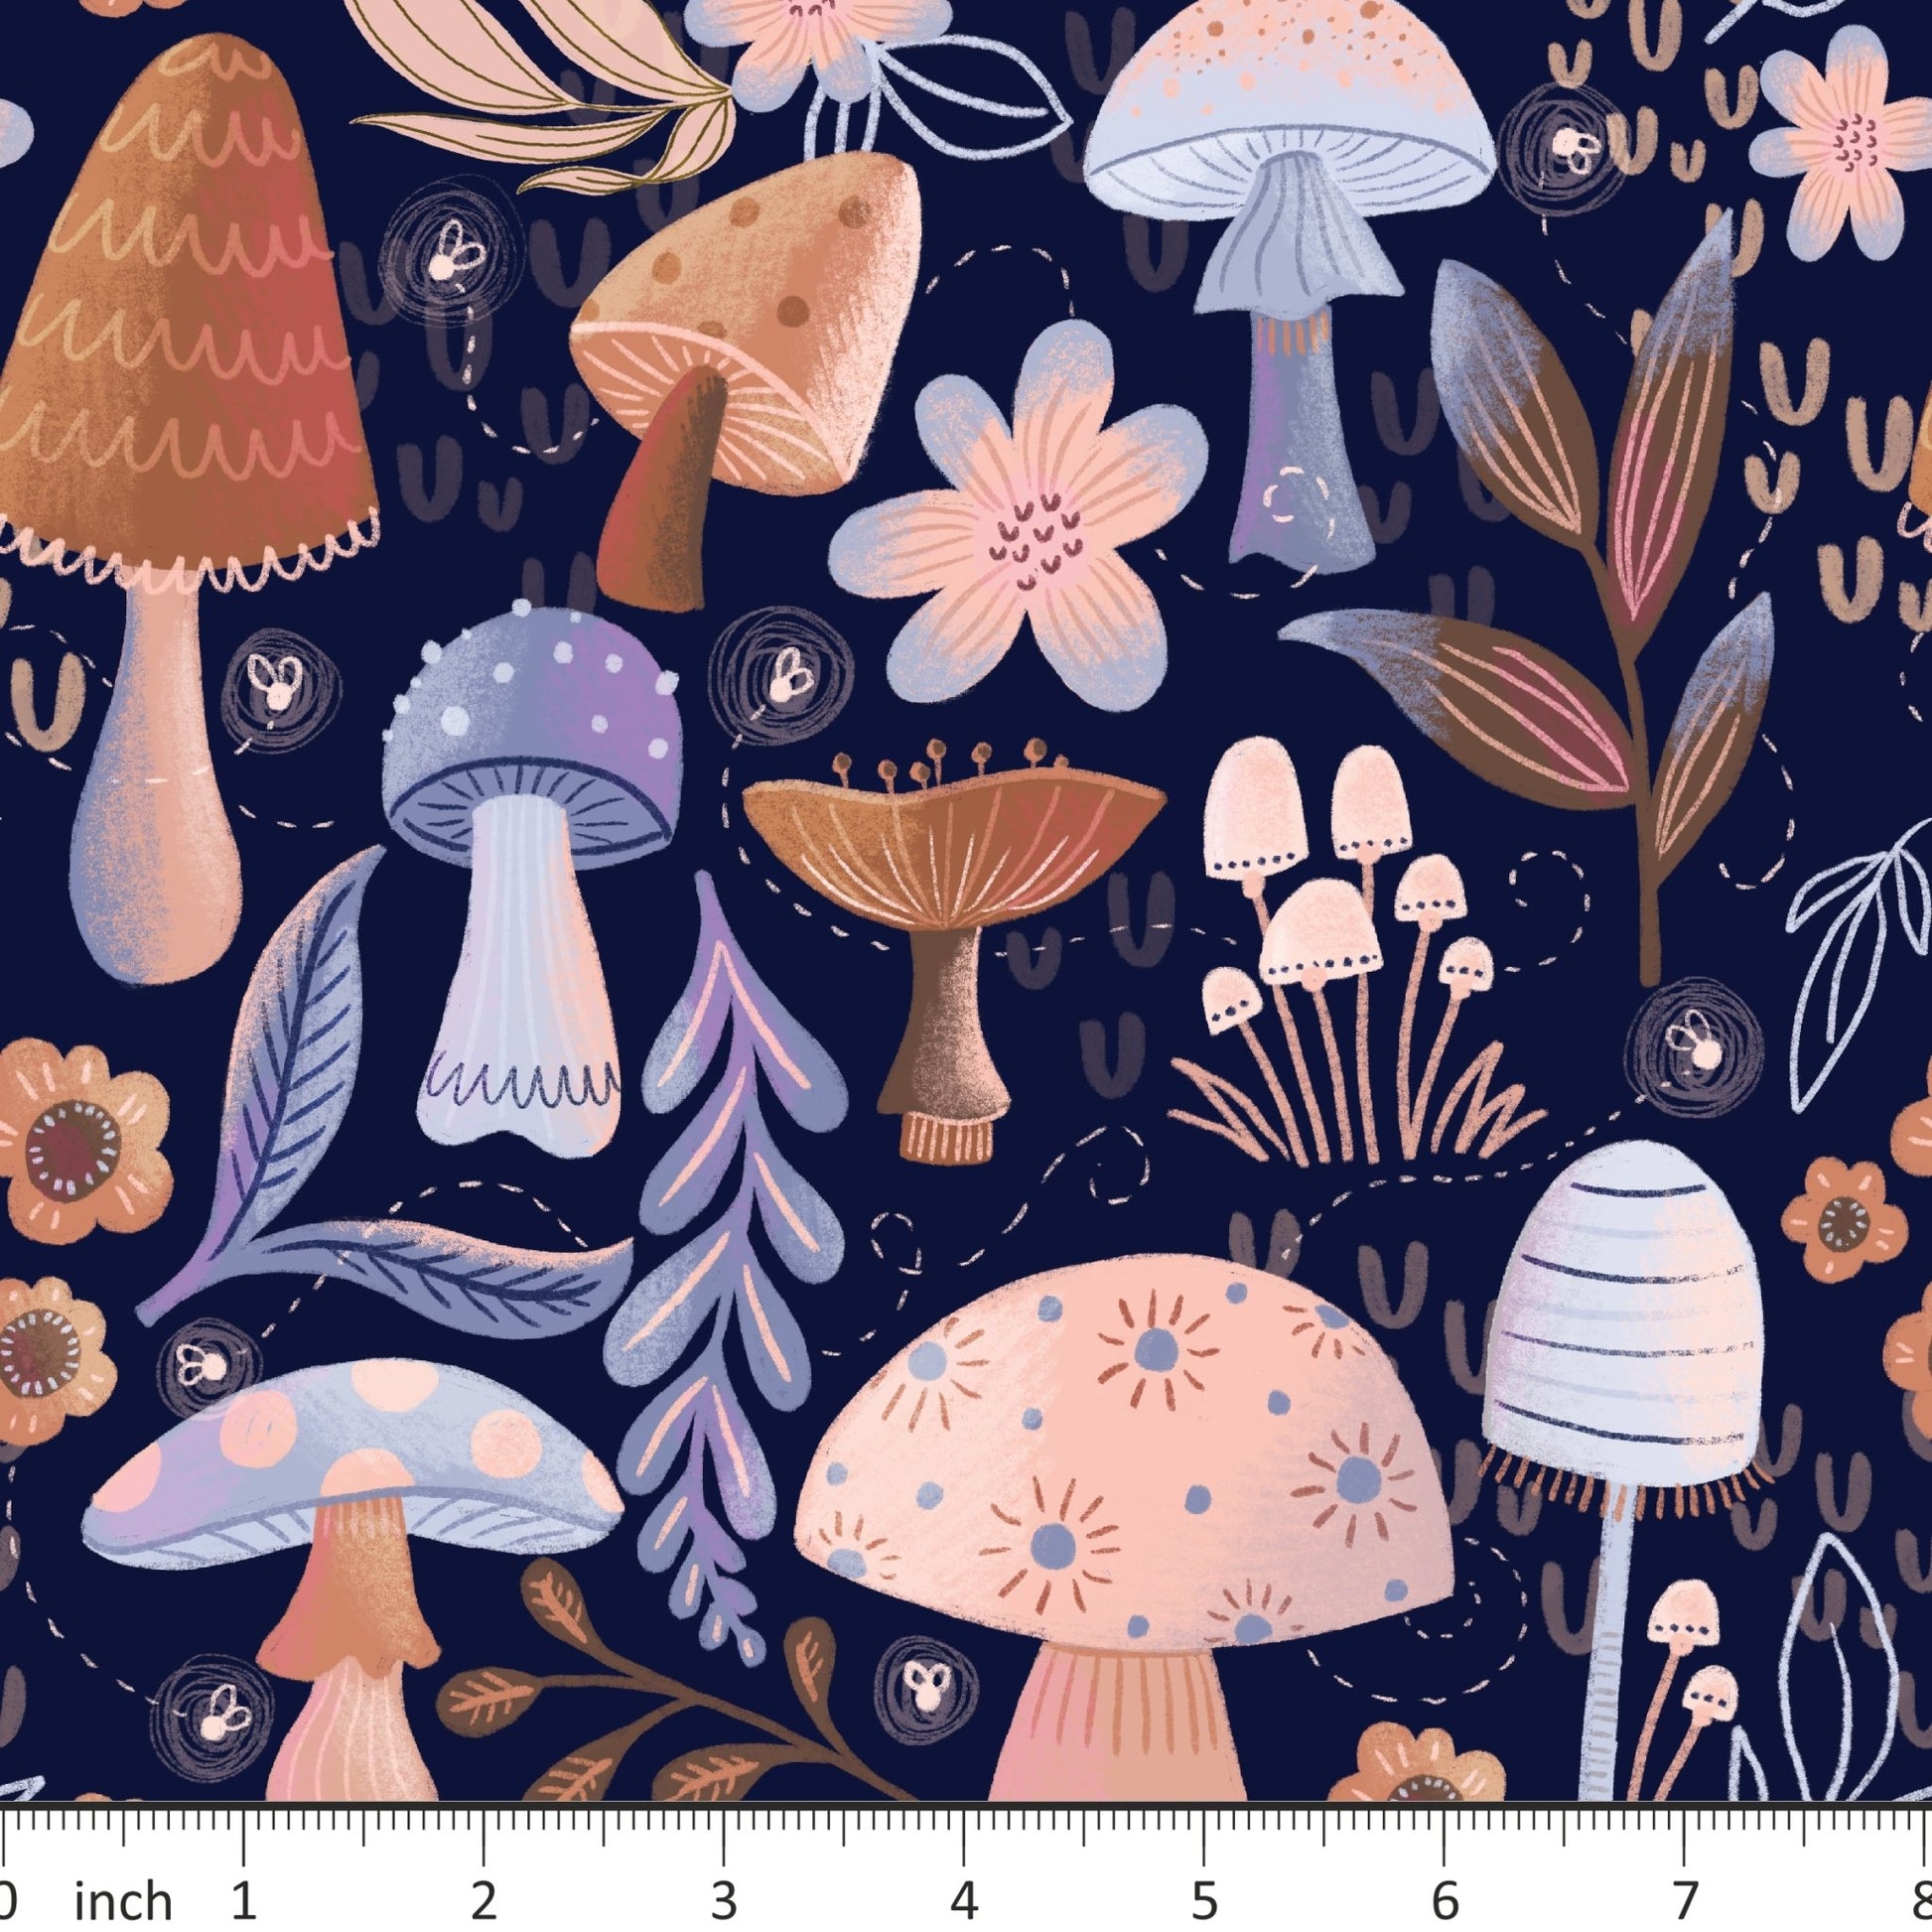 FineapplePair - Mushroom - Dark Background - Little Rhody Sewing Co.